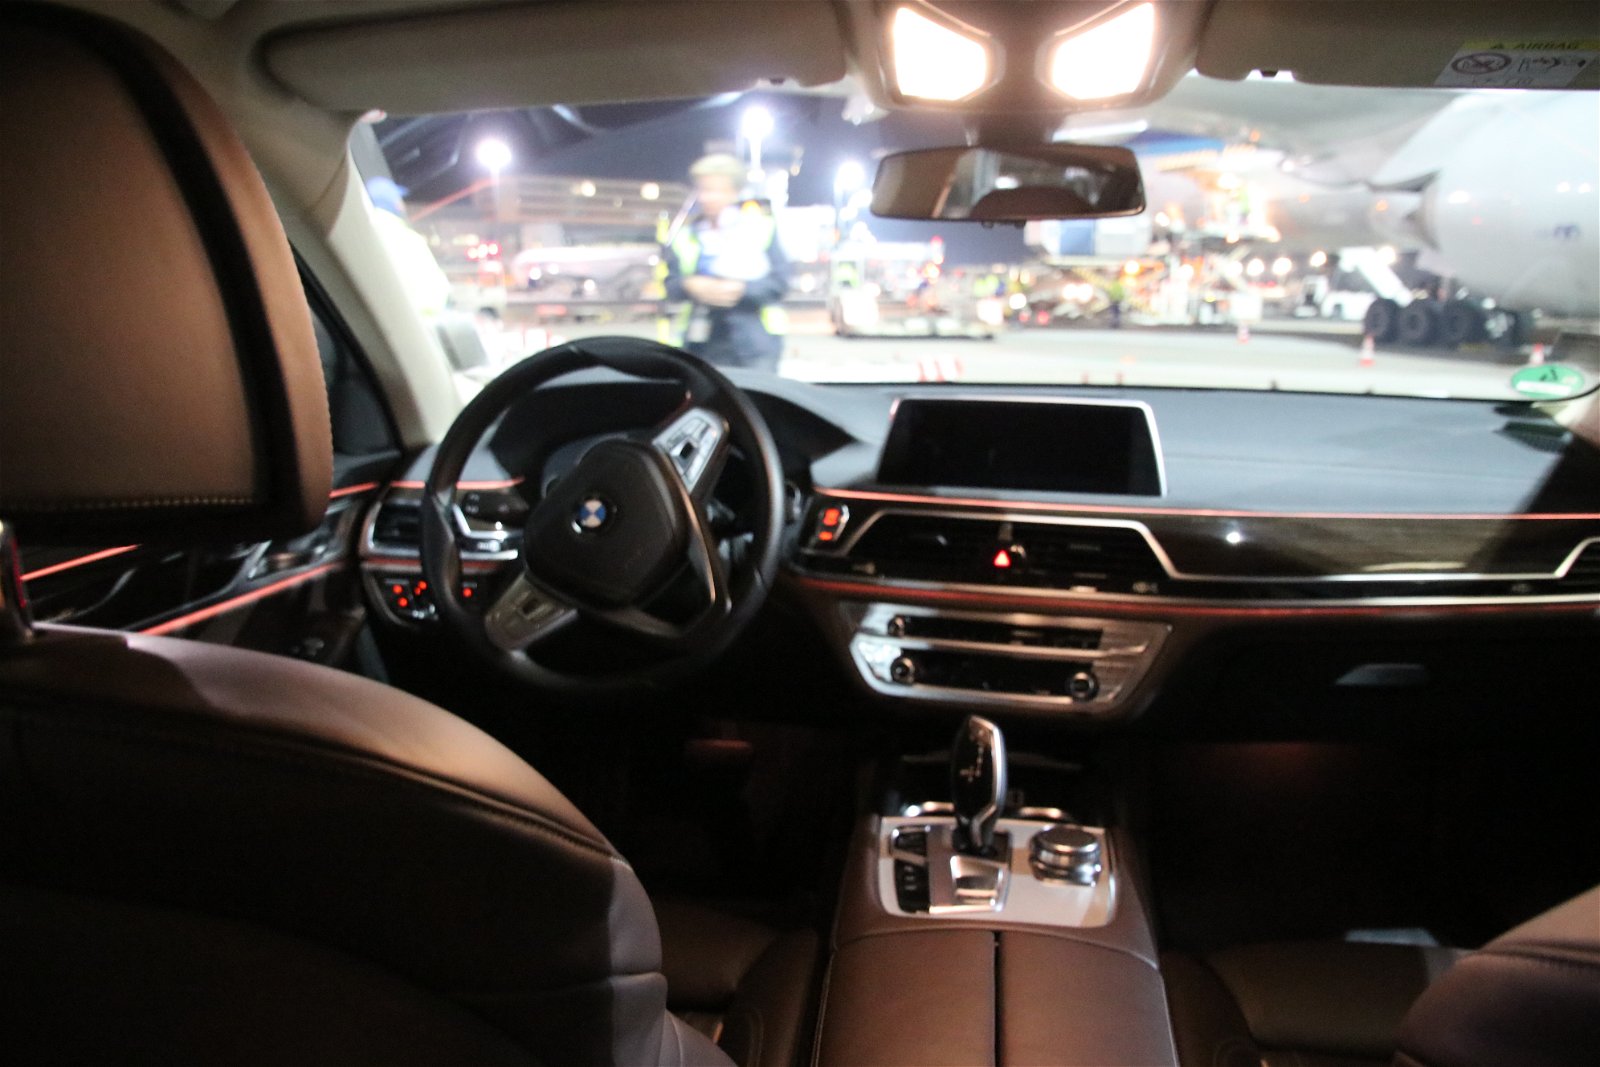 The BMW interior. 